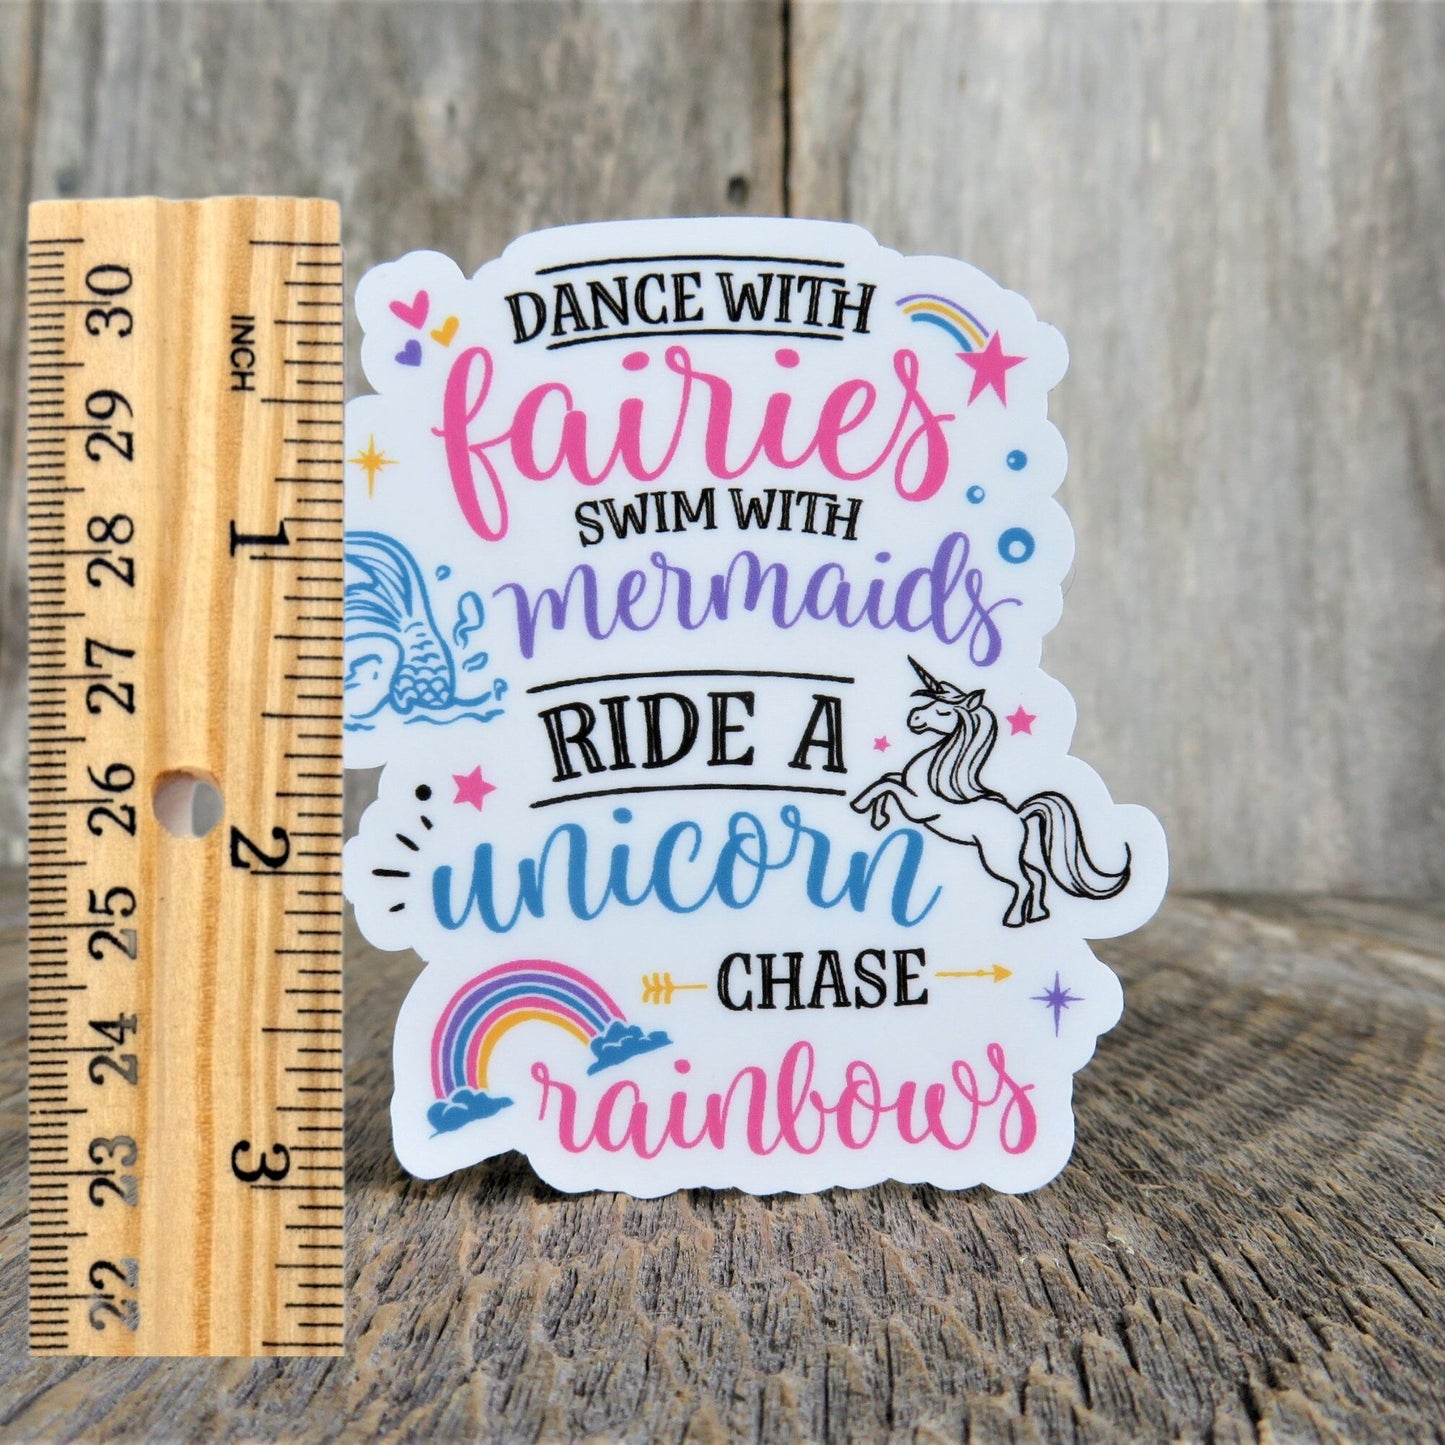 Dance with Fairies Swim with Mermaids Ride a Unicorns Chase Rainbows Sticker Waterproof Stress Free